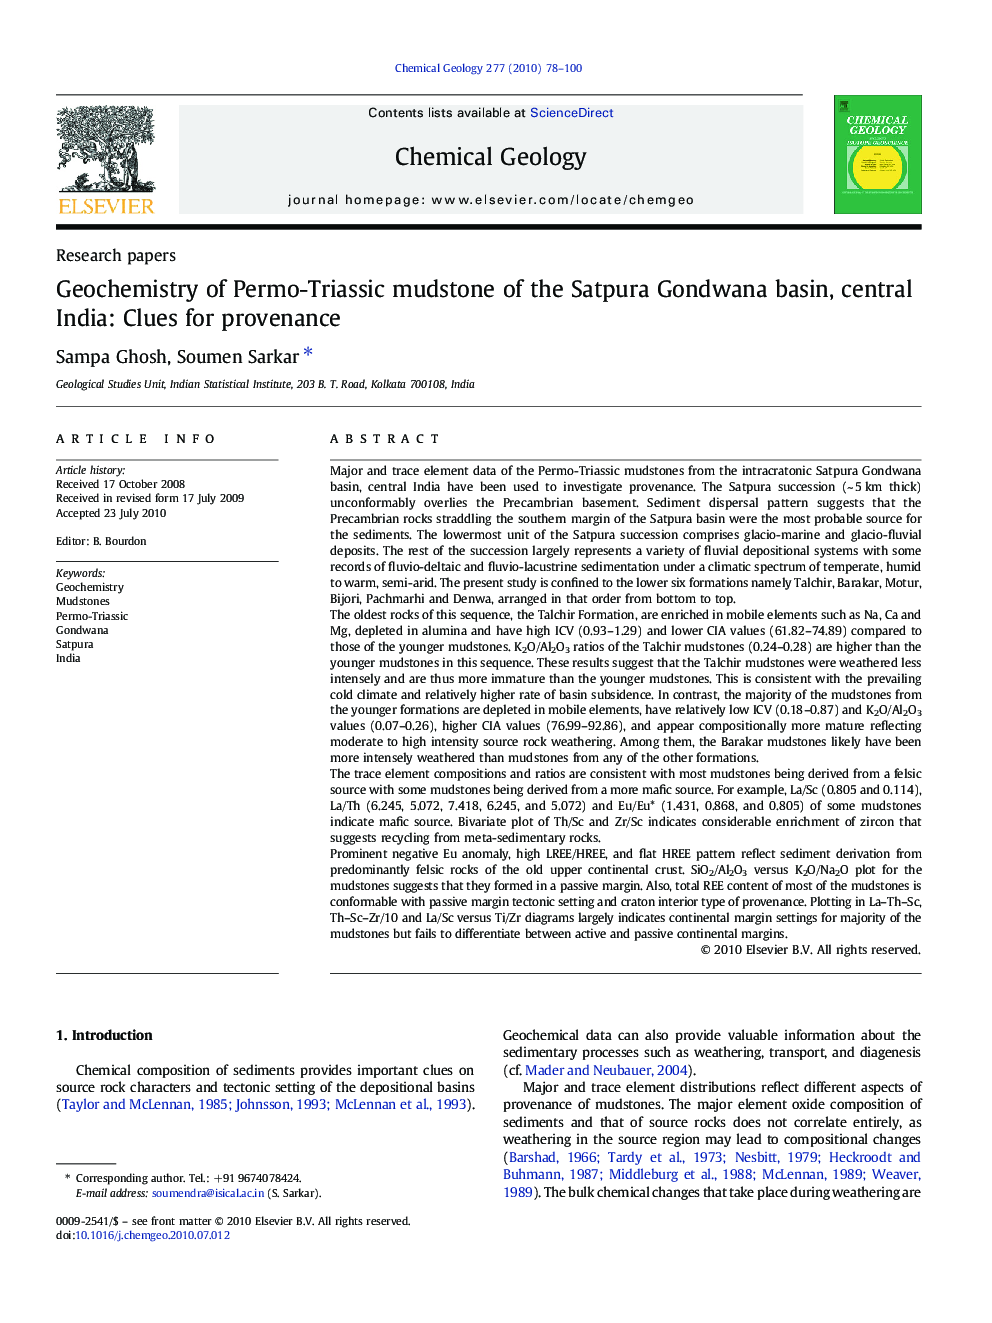 Geochemistry of Permo-Triassic mudstone of the Satpura Gondwana basin, central India: Clues for provenance